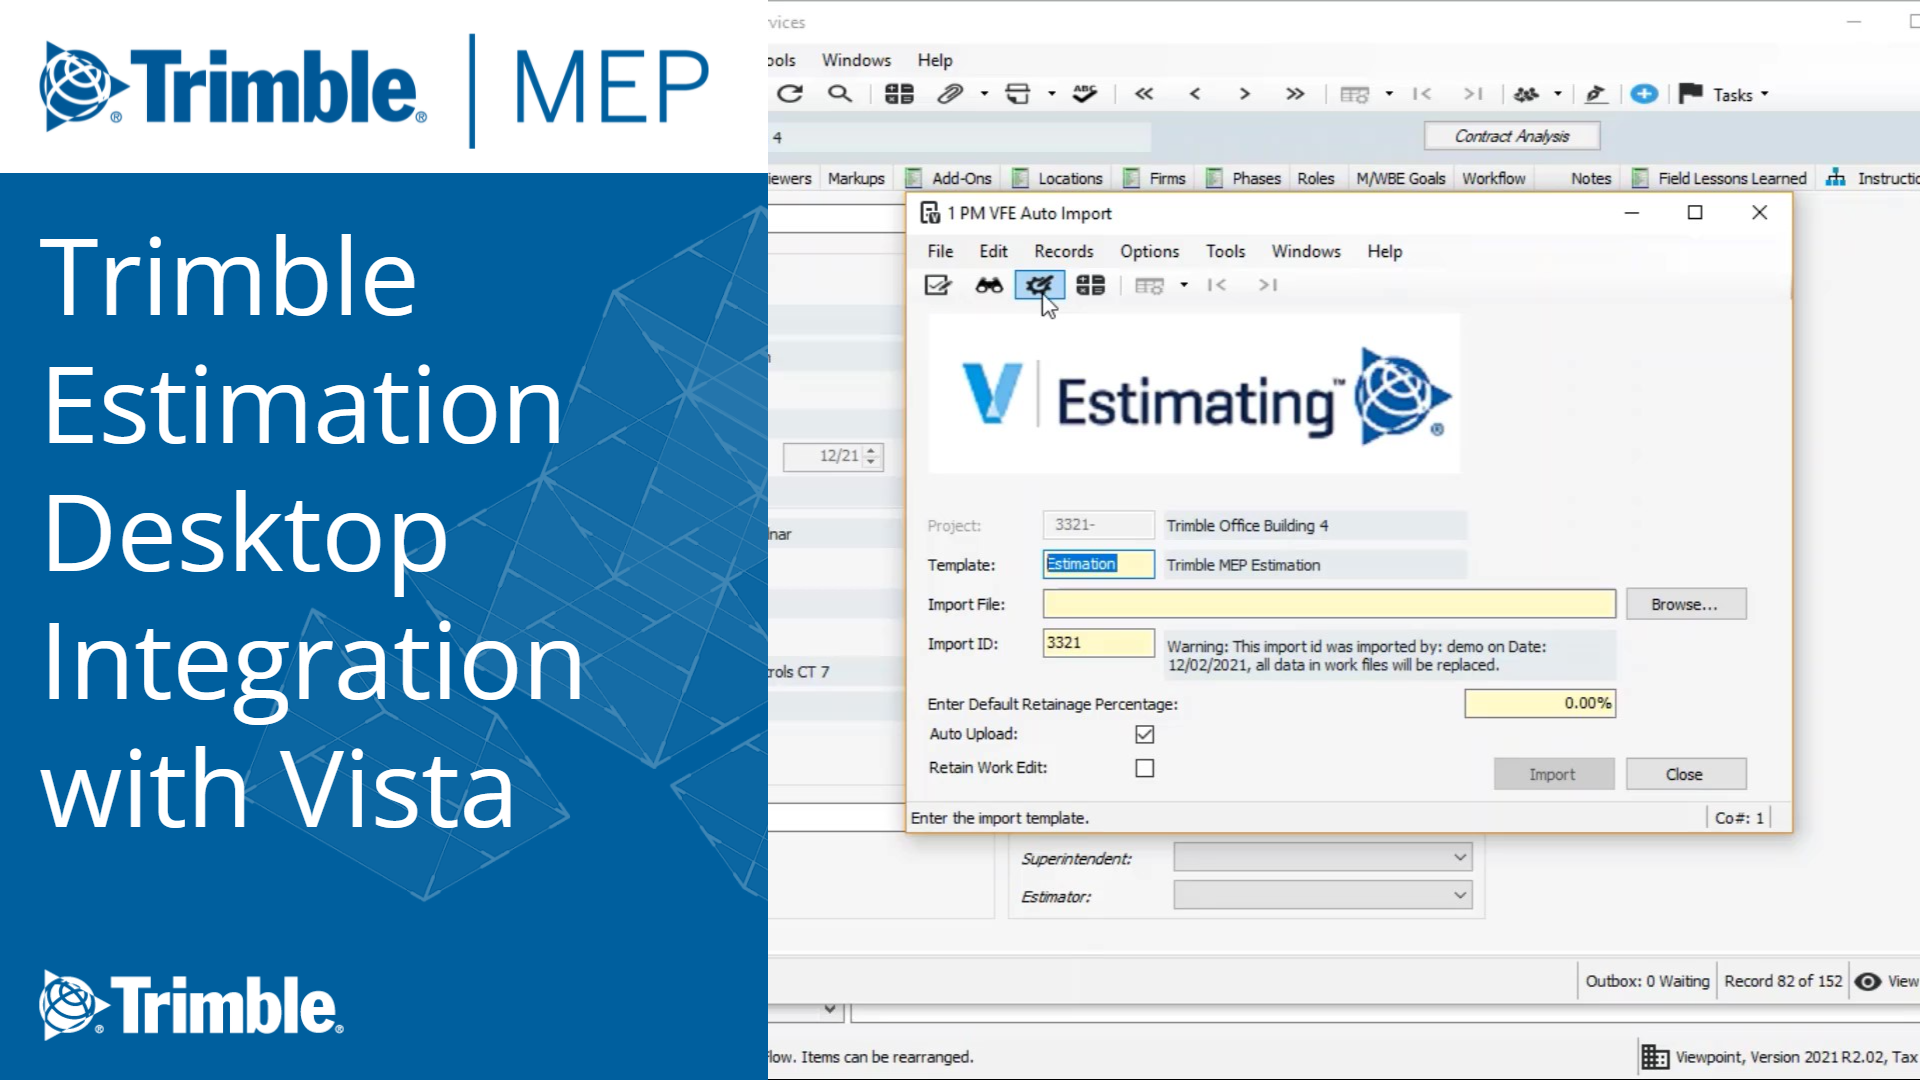 Estimation Desktop Integration with Vista